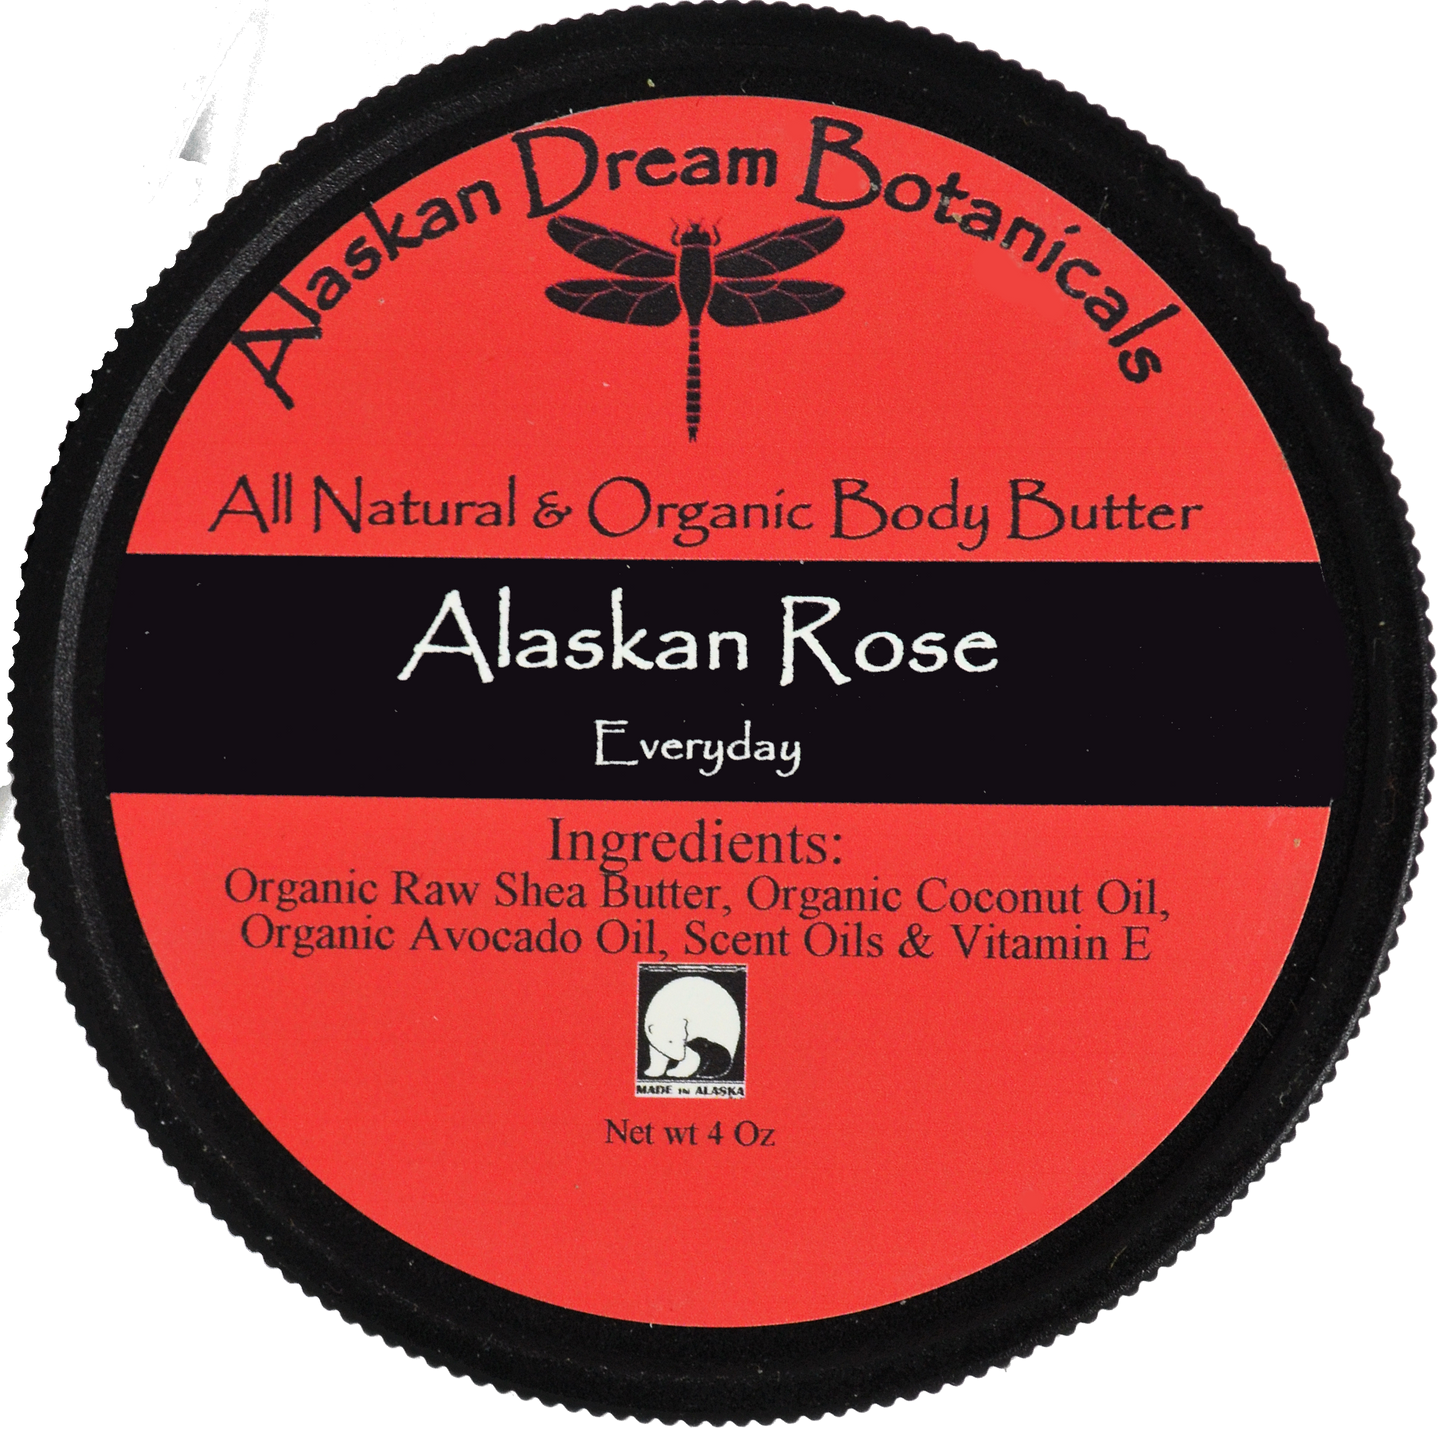 Alaskan Rose Everyday Body Butter - Alaskan Dream Botanicals